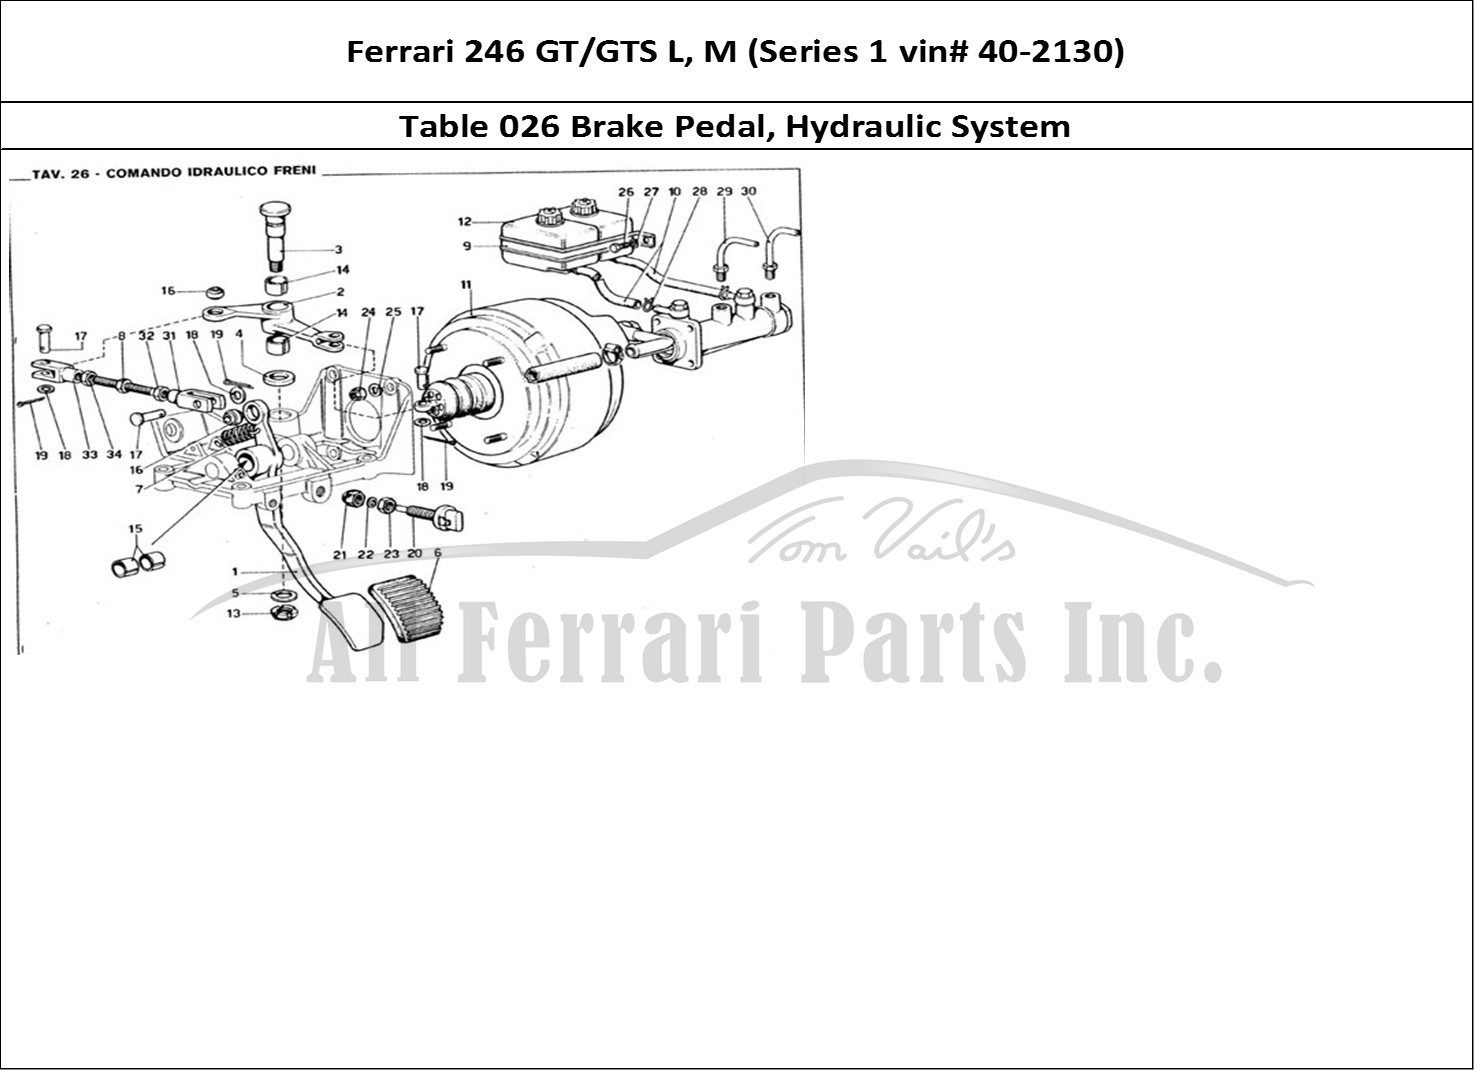 Ferrari Parts Ferrari 246 GT Series 1 Page 026 Brake Hydraulic System